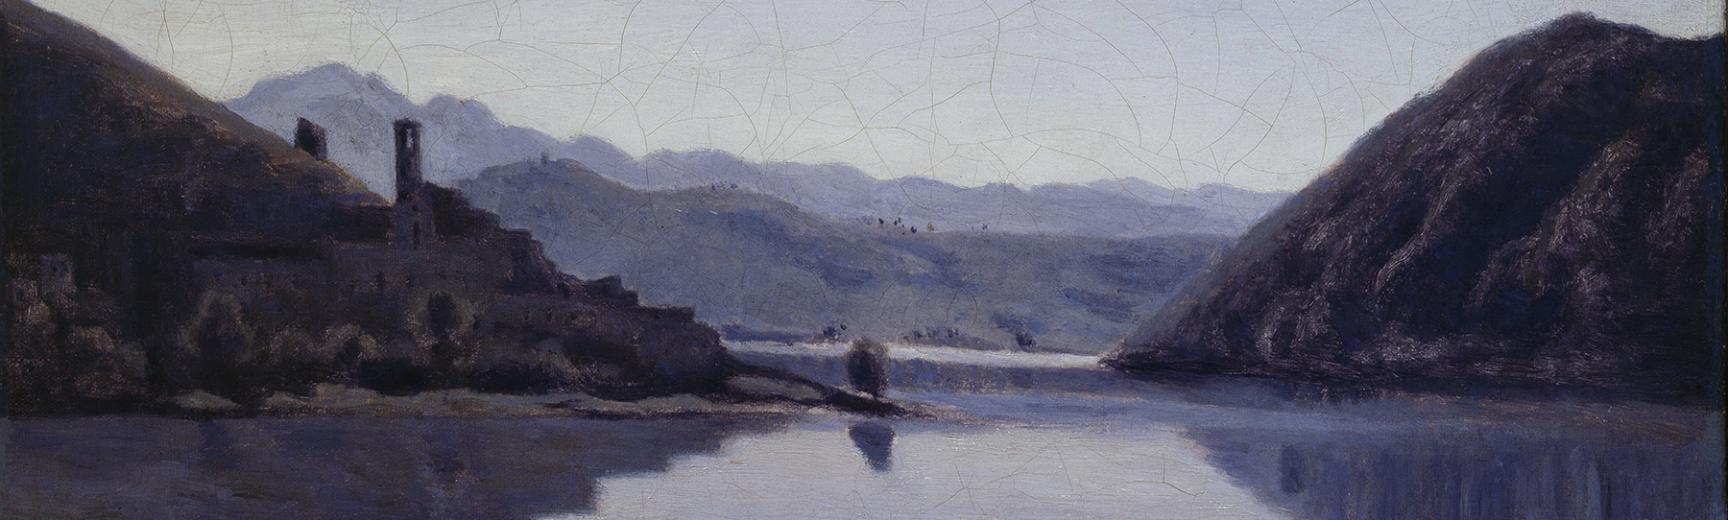 Lago di Piediluco, Umbria (detail) by Jean Baptiste-Camille Corot (1796-1875)